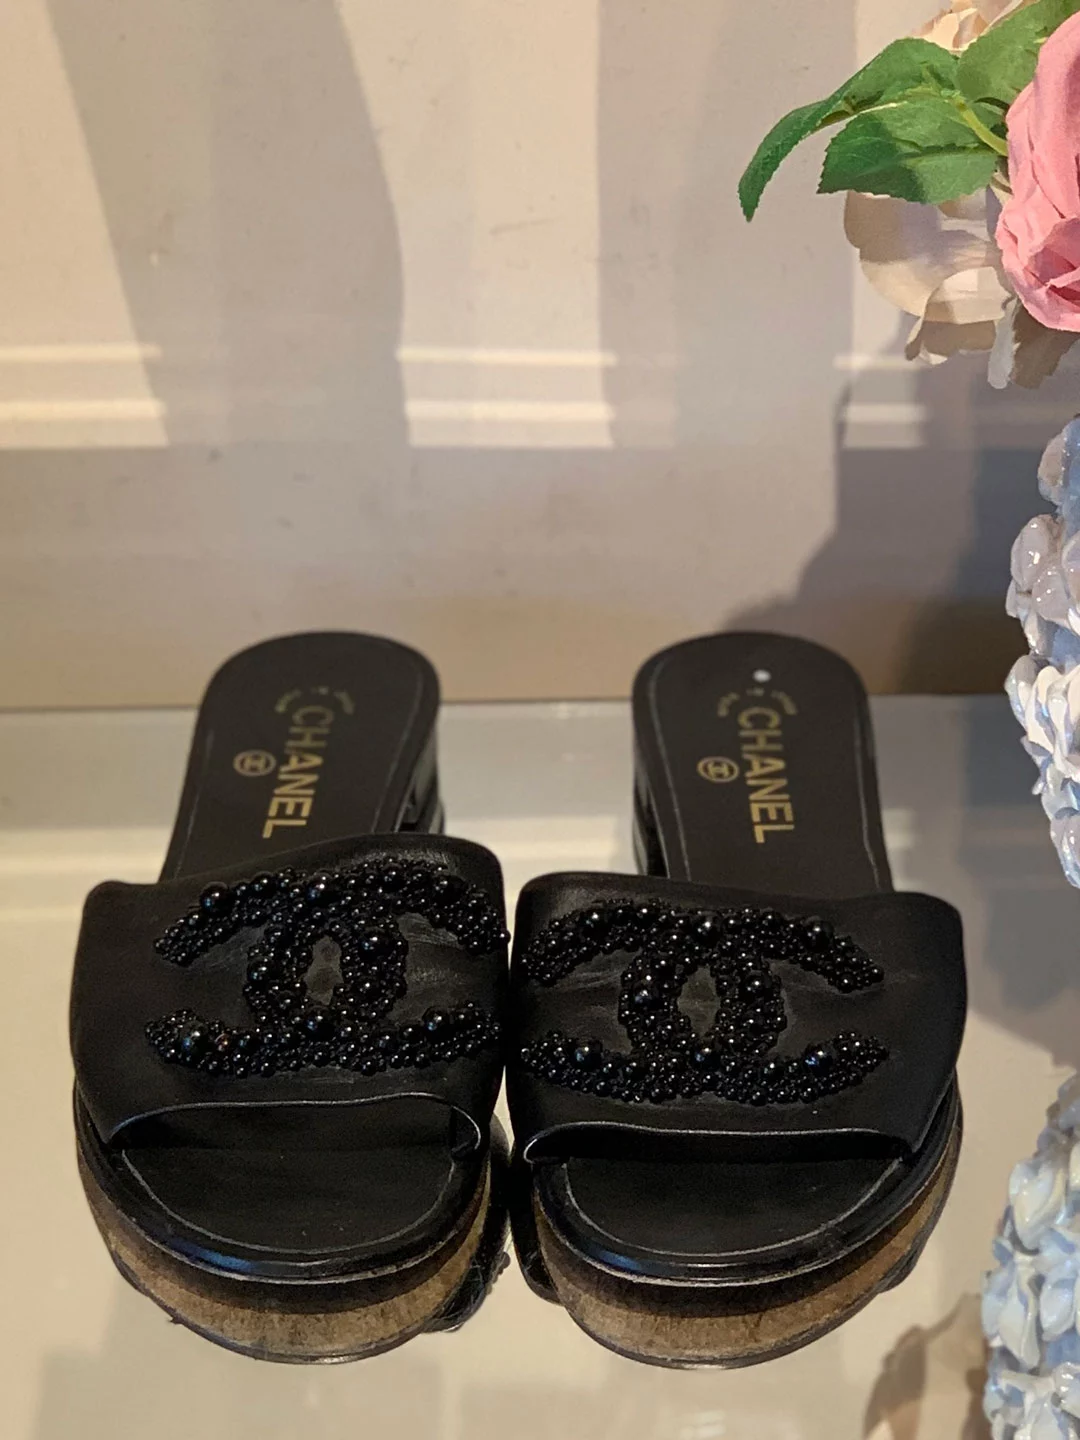 Chanel Interlocking CC Black Leather Sandals Size 39 (UK 6